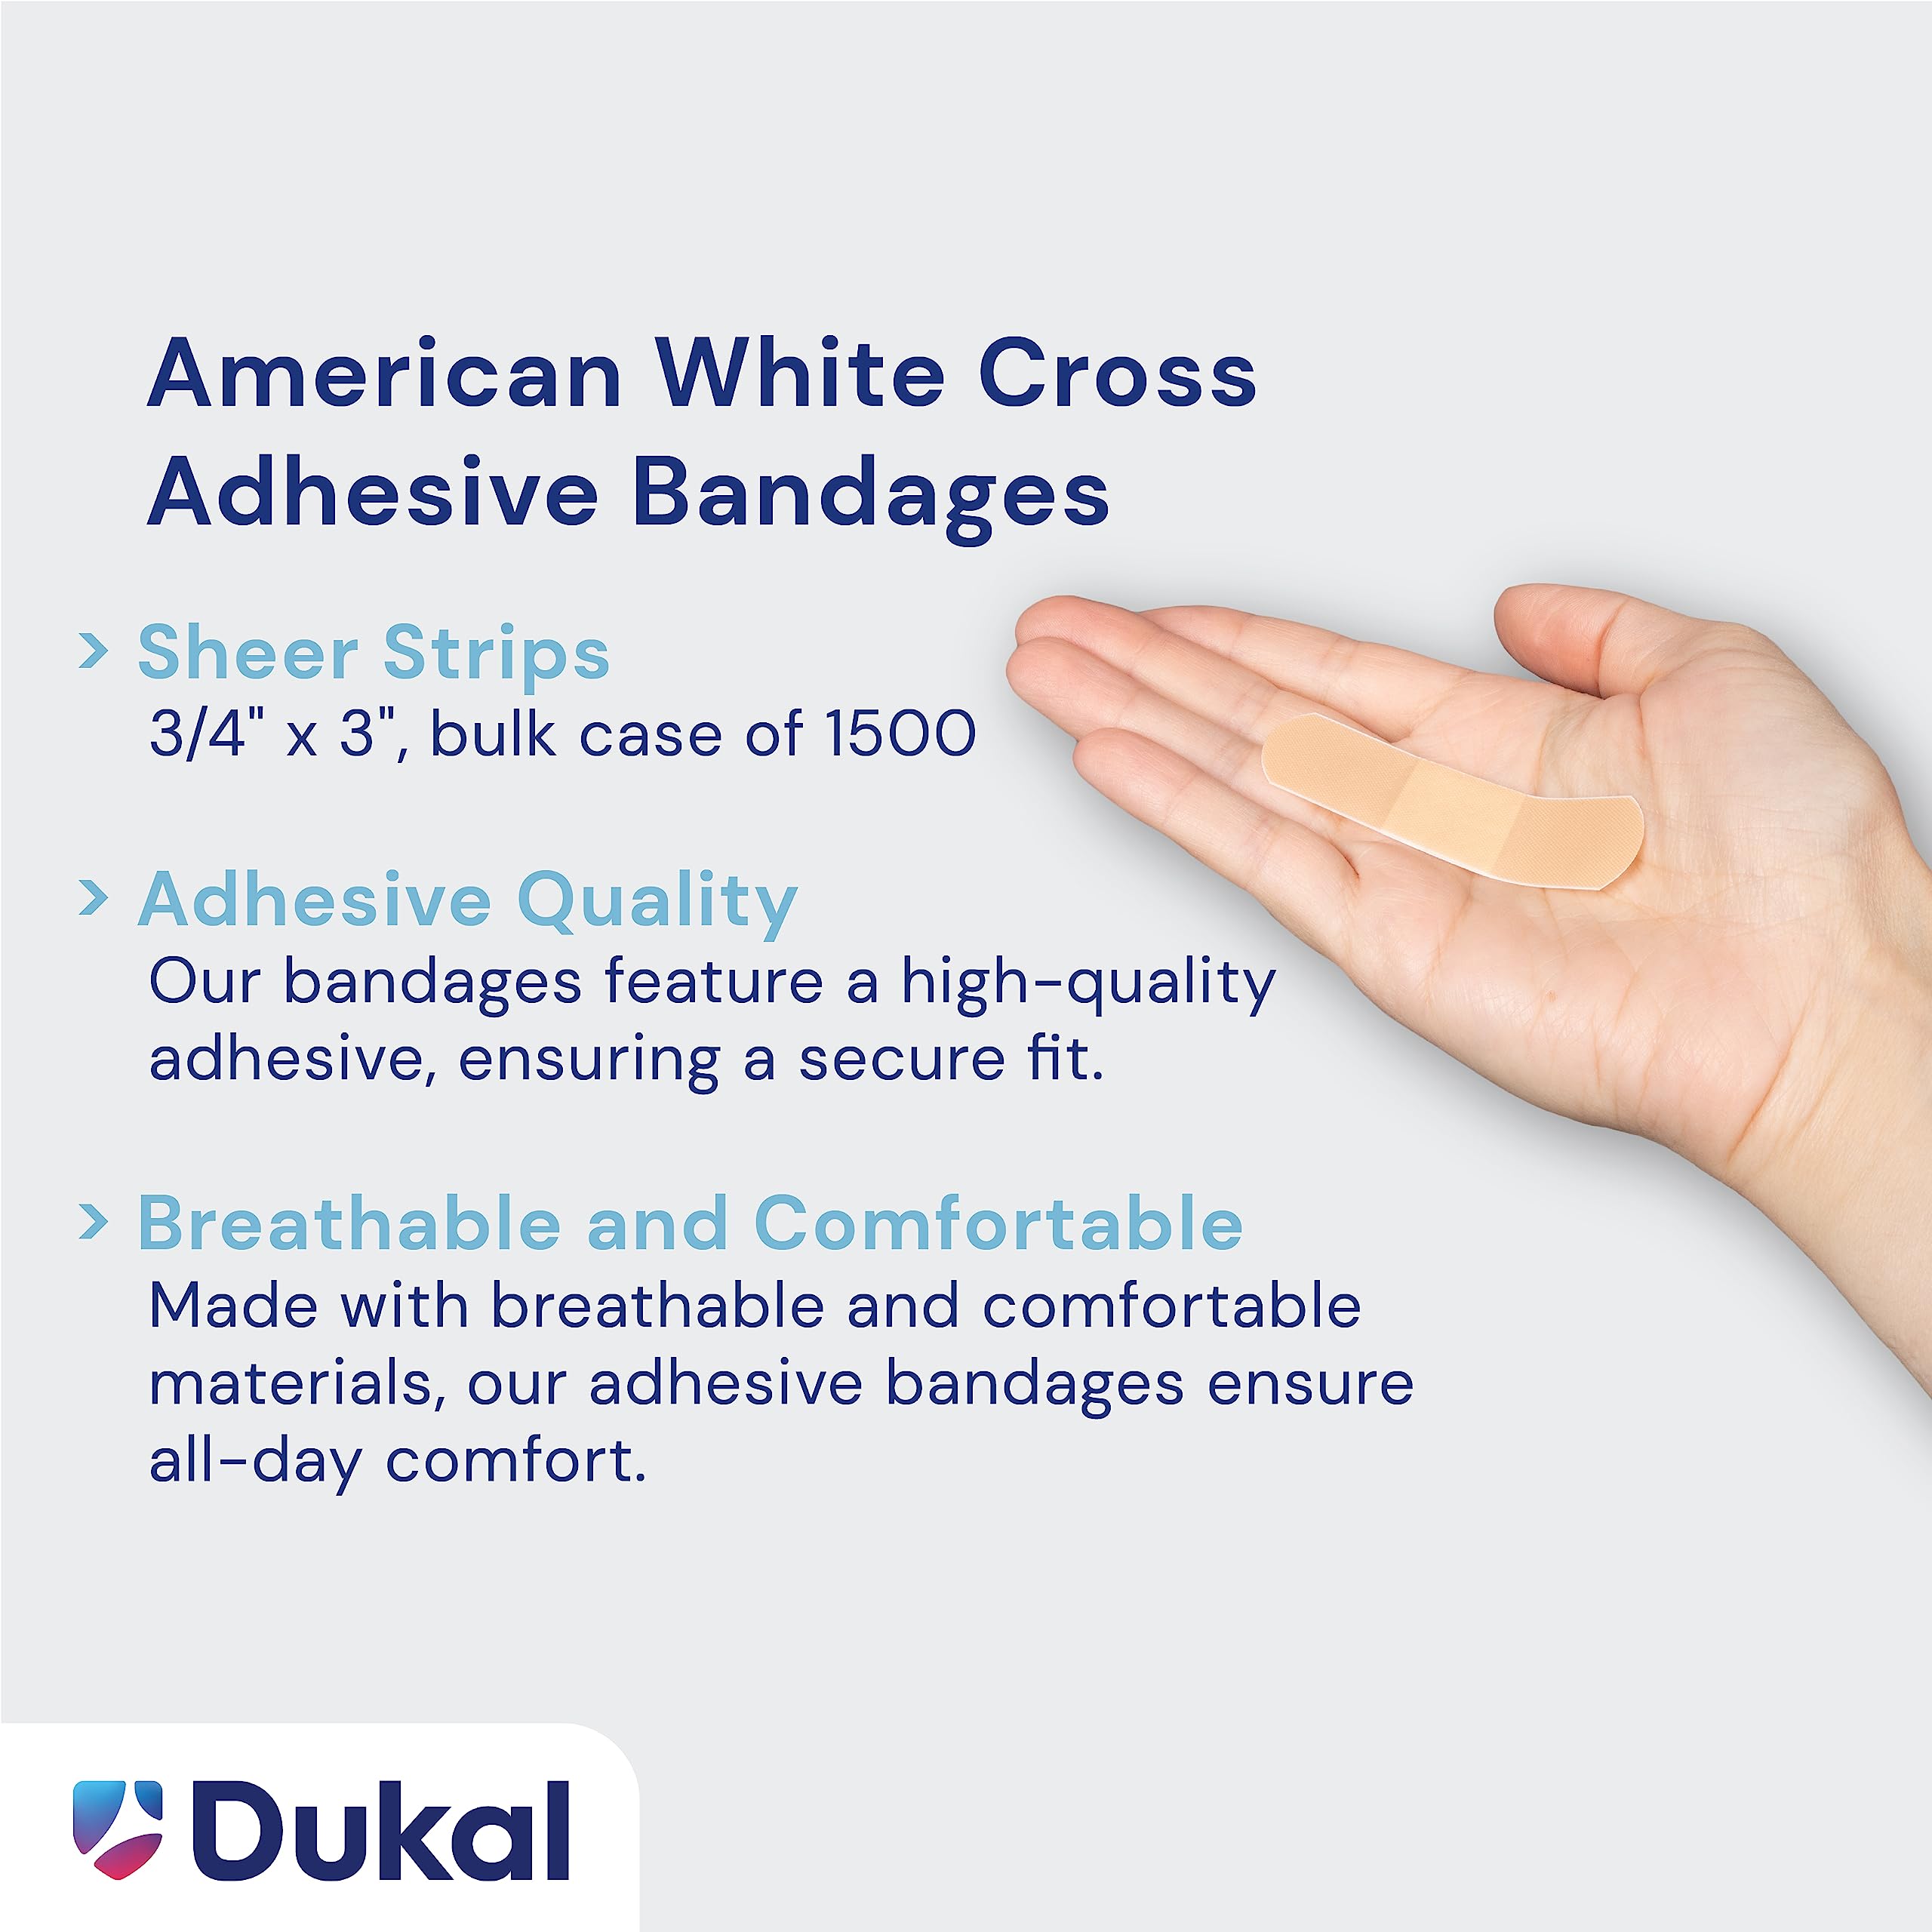 American White Cross Adhesive Bandages, Sheer Strips, 3/4